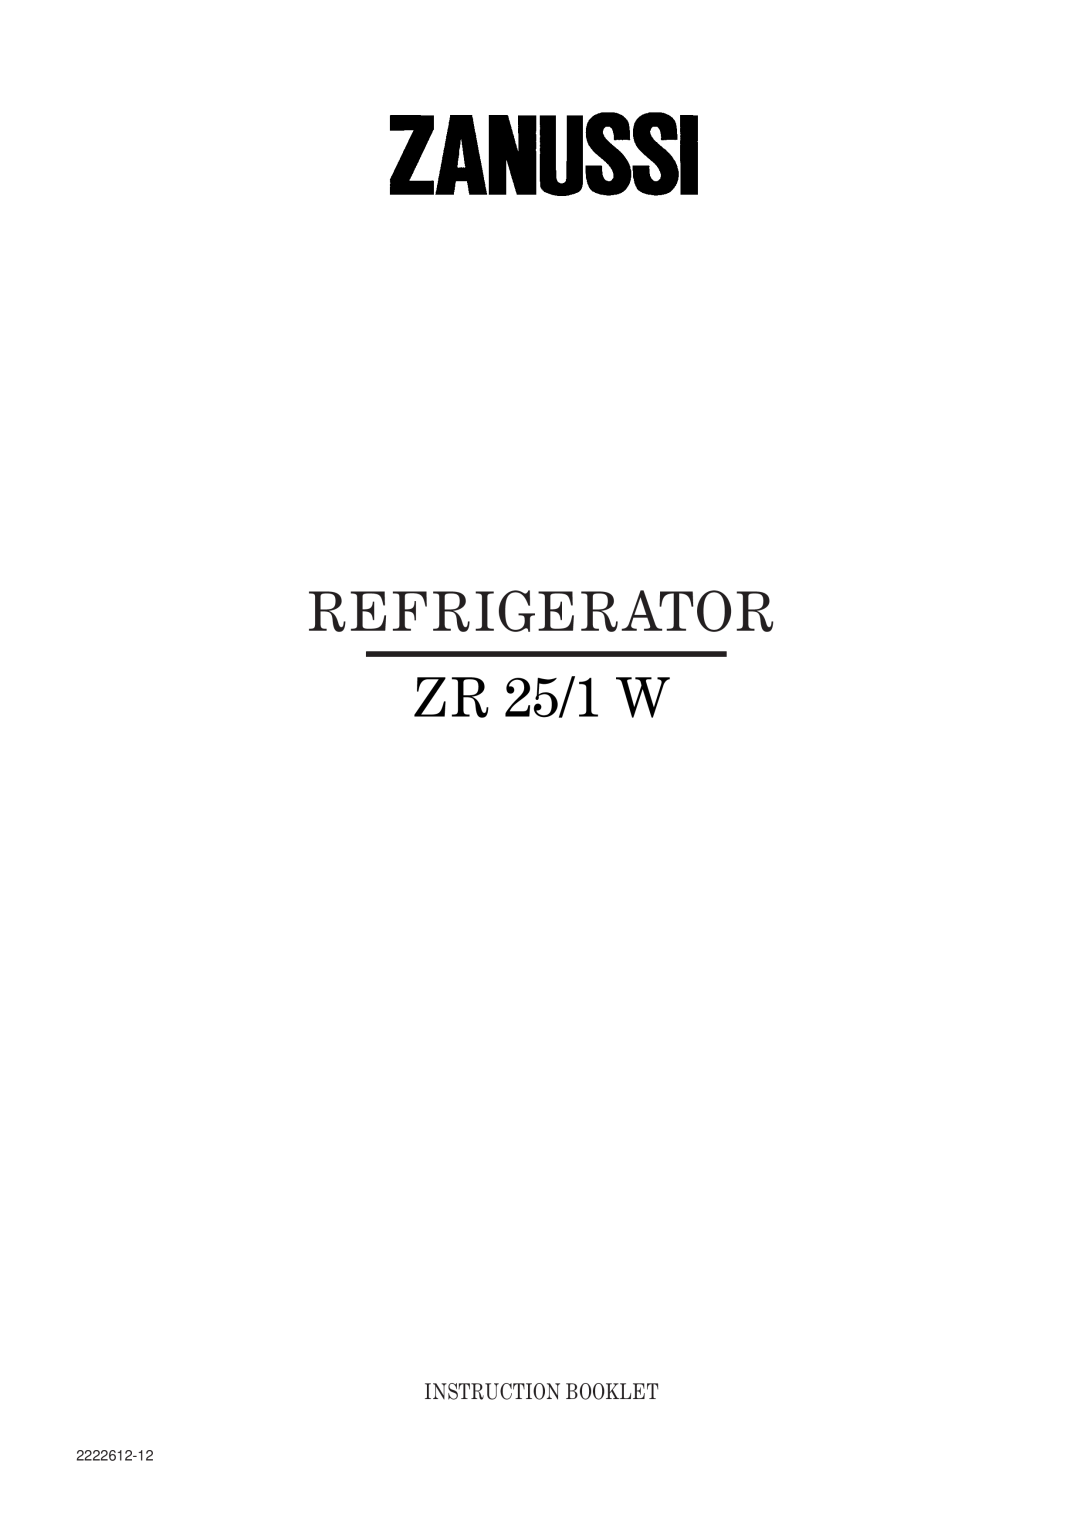 Zanussi ZR 25/1 W manual Refrigerator, Instruction Booklet, 2222612-12 